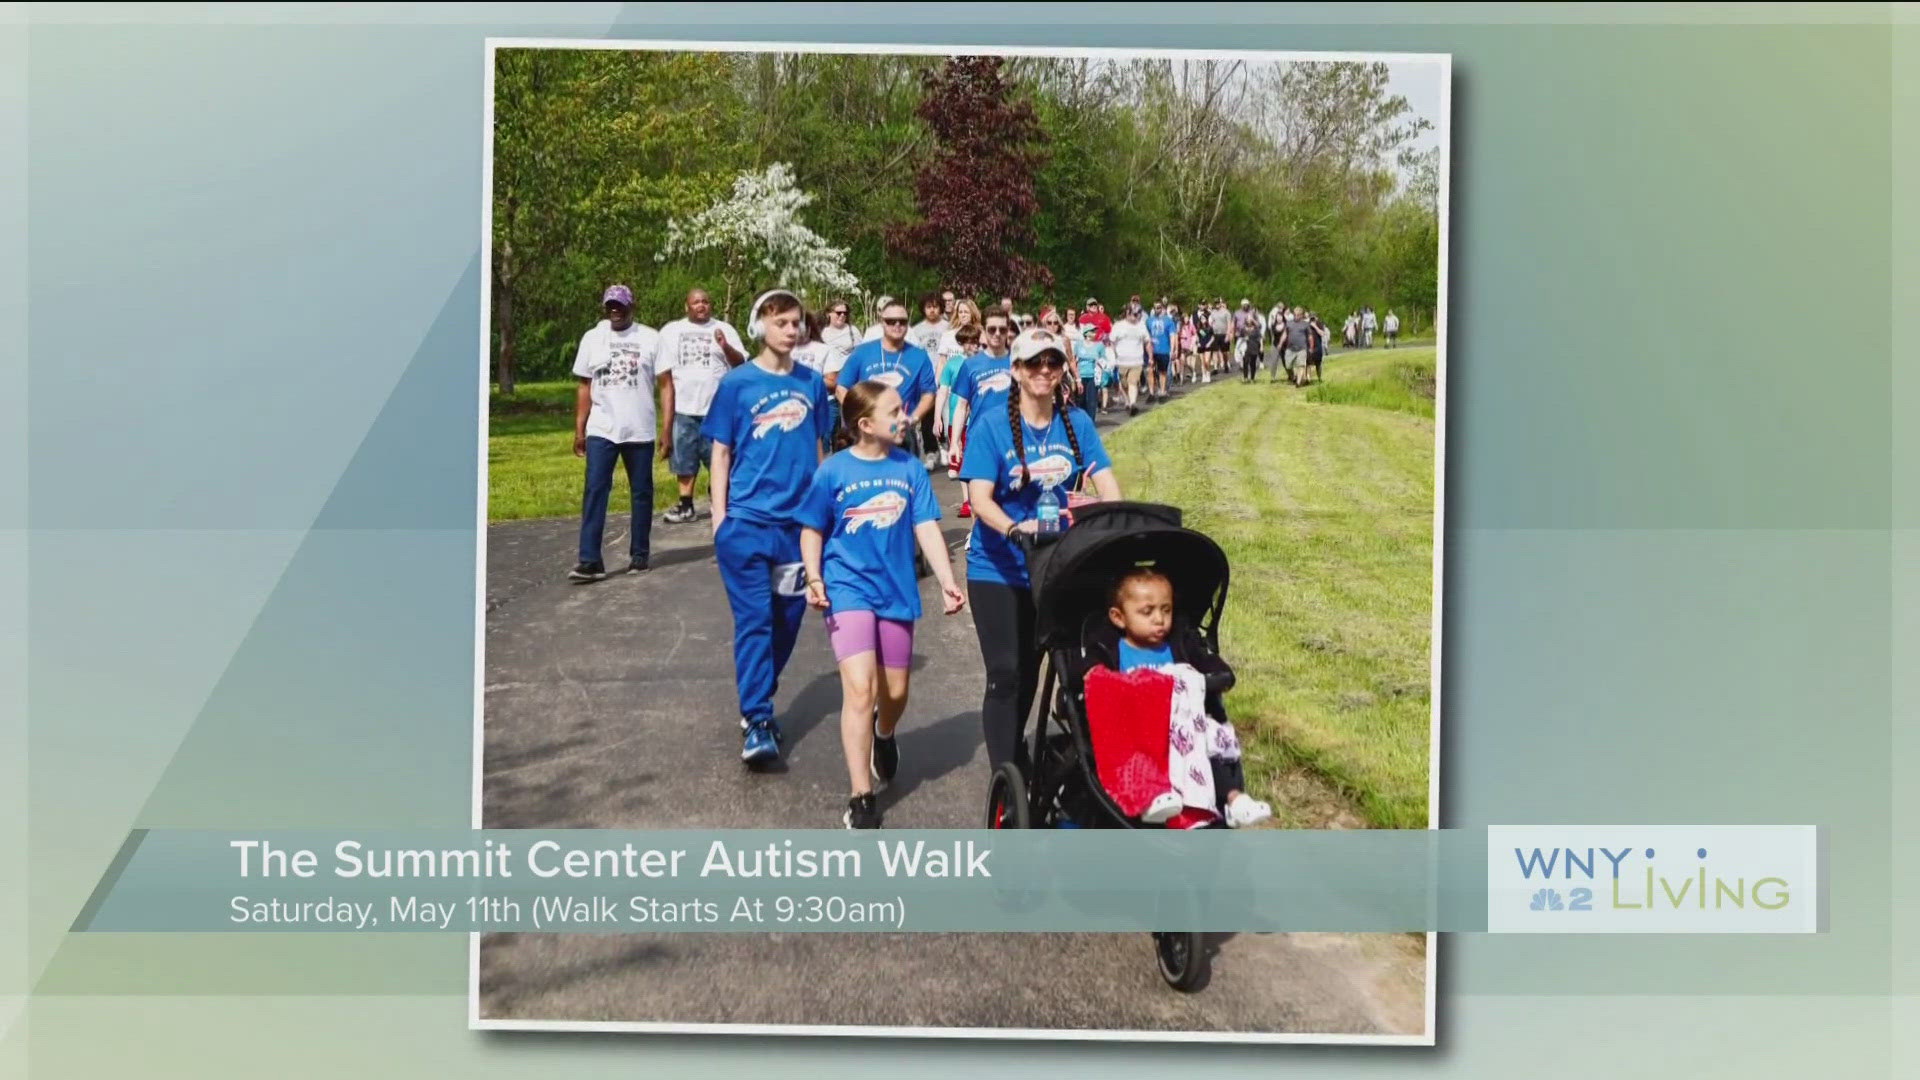 Sat 4/20 - The Summit Center Autism Walk (THIS VIDEO IS SPONSORED BY THE SUMMIT CENTER AUTISM WALK)